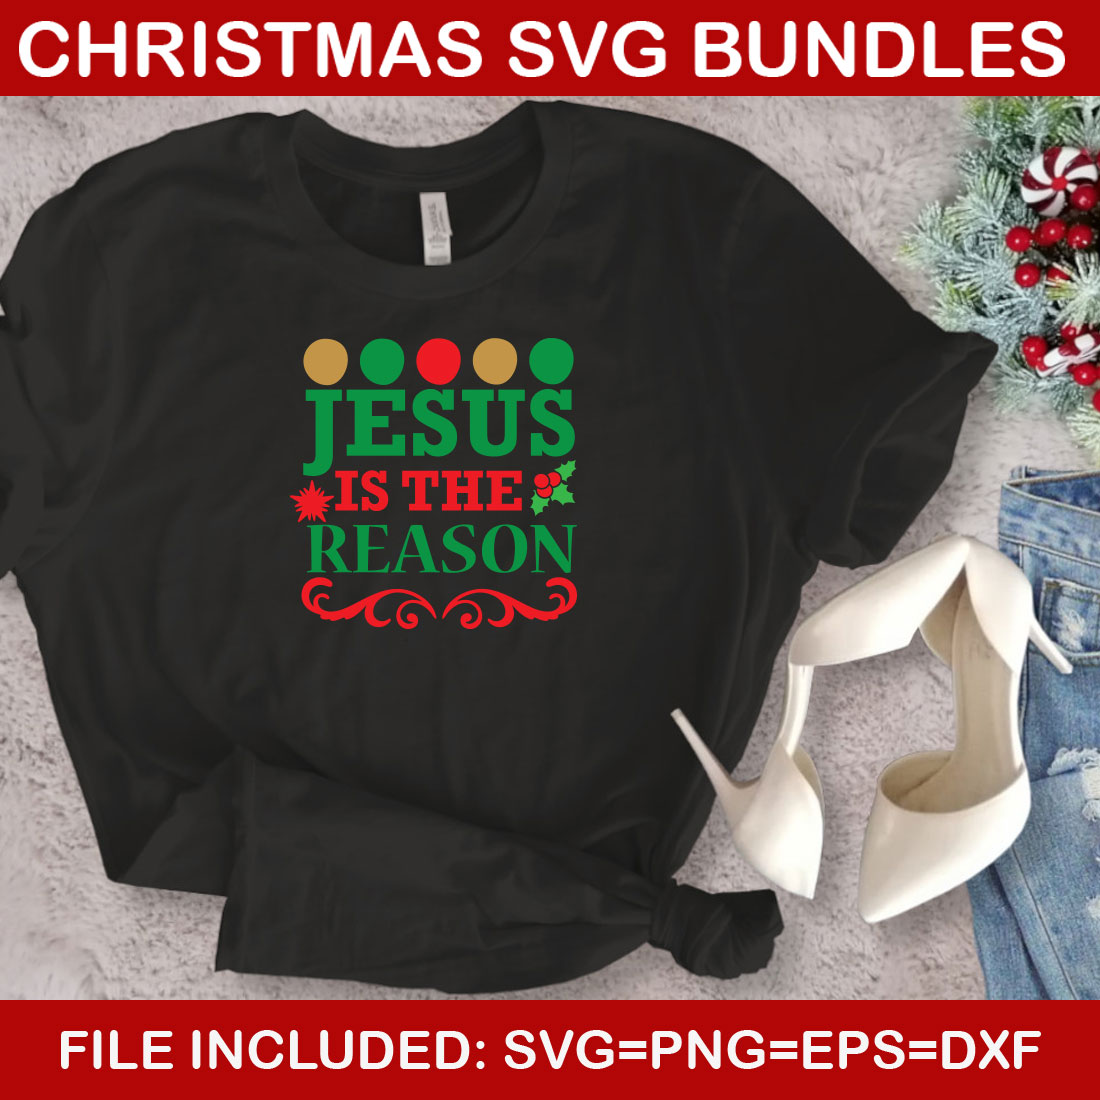 Ultimate List! 6 Christmas SVG Free Bundles preview image.